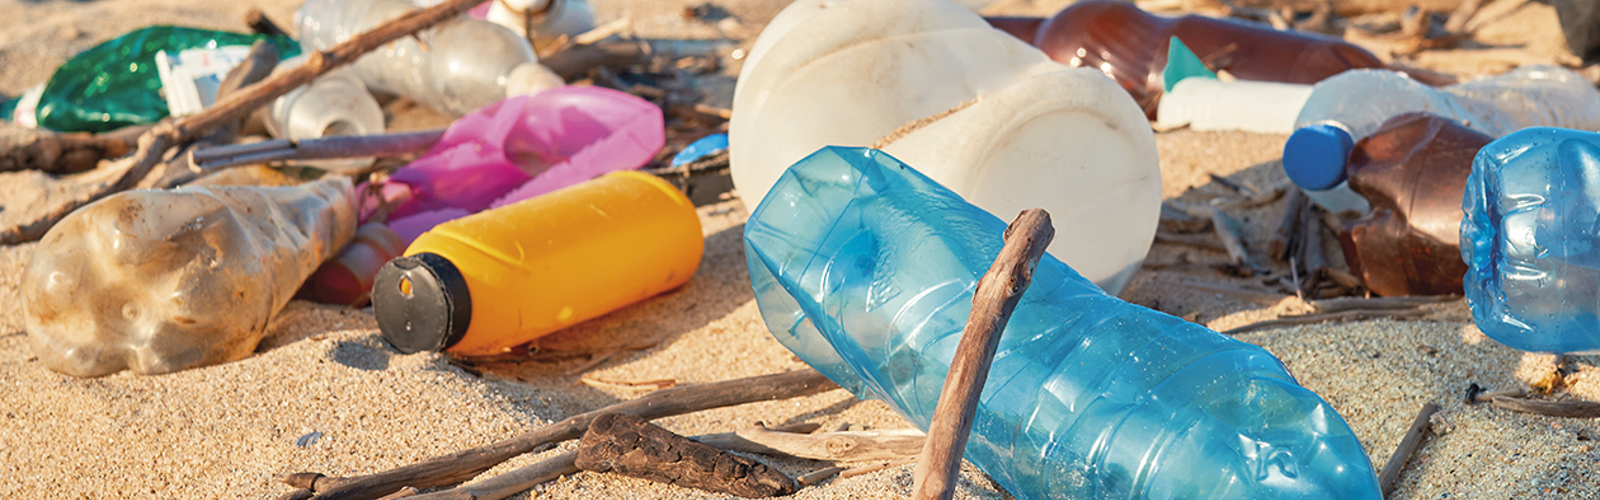 Plastic waste on a beach